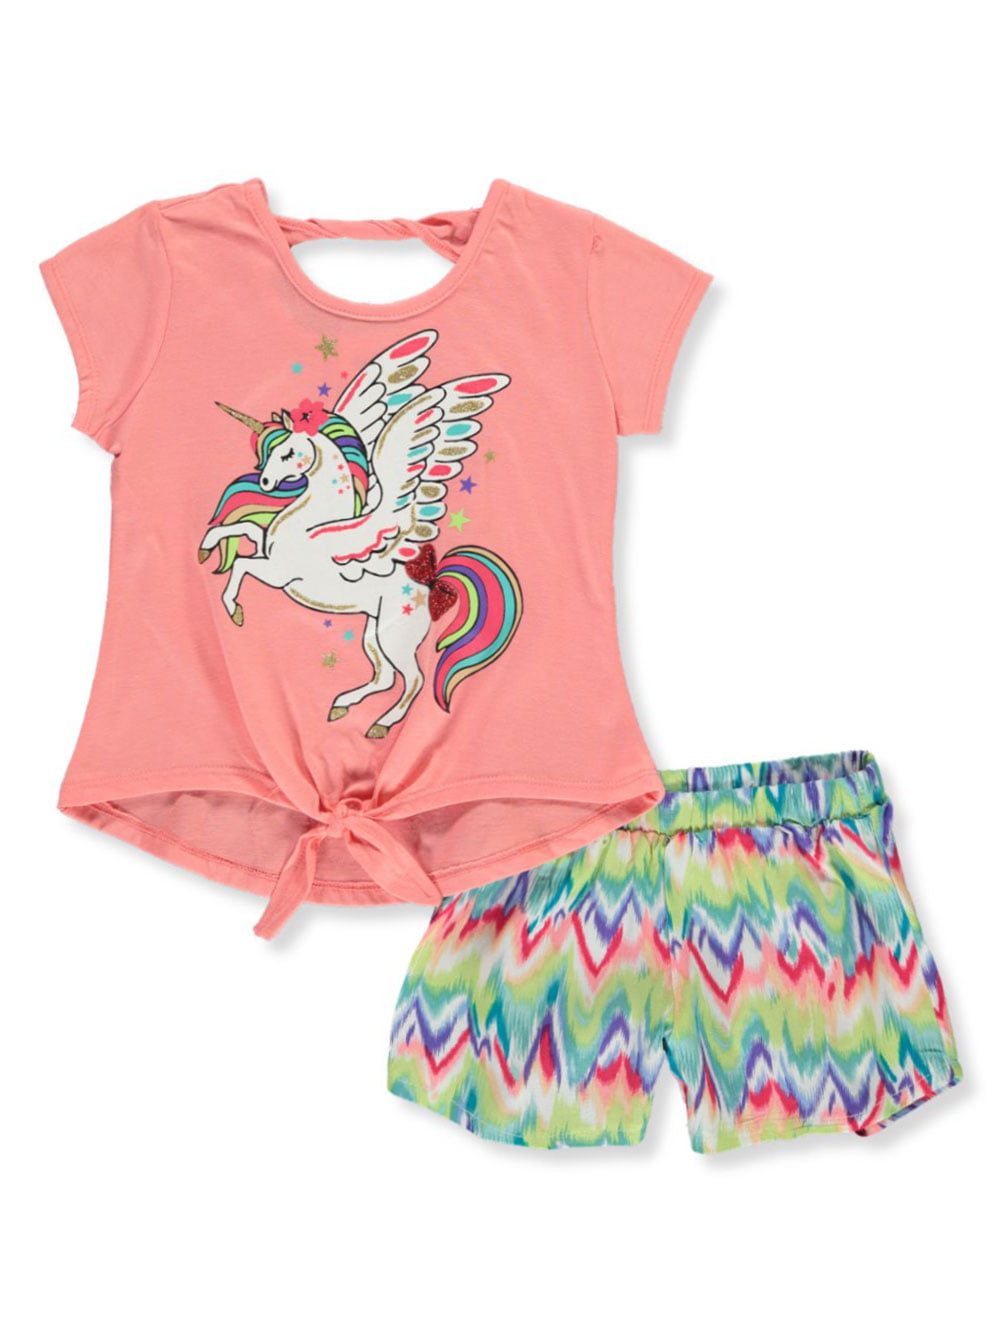 RMLA Girls Glitter Rainbow Unicorn 2-Piece Shorts Set Outfit